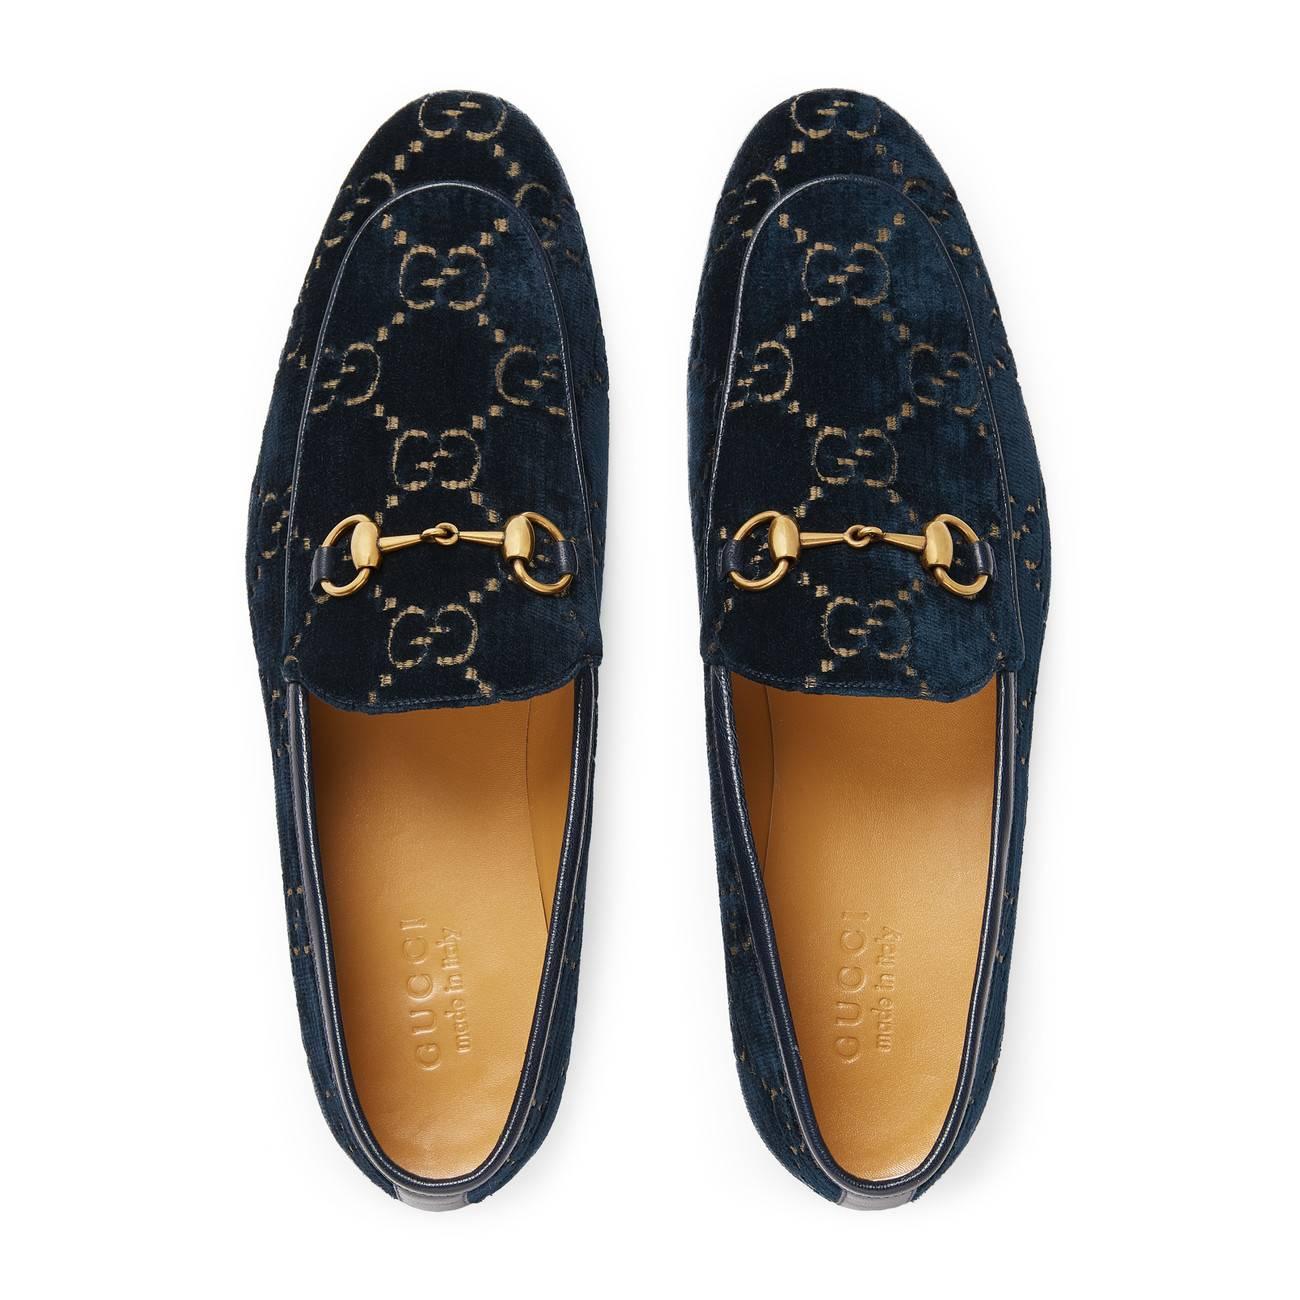 Gucci Jordaan GG Velvet Loafer in Blue for Men - Lyst